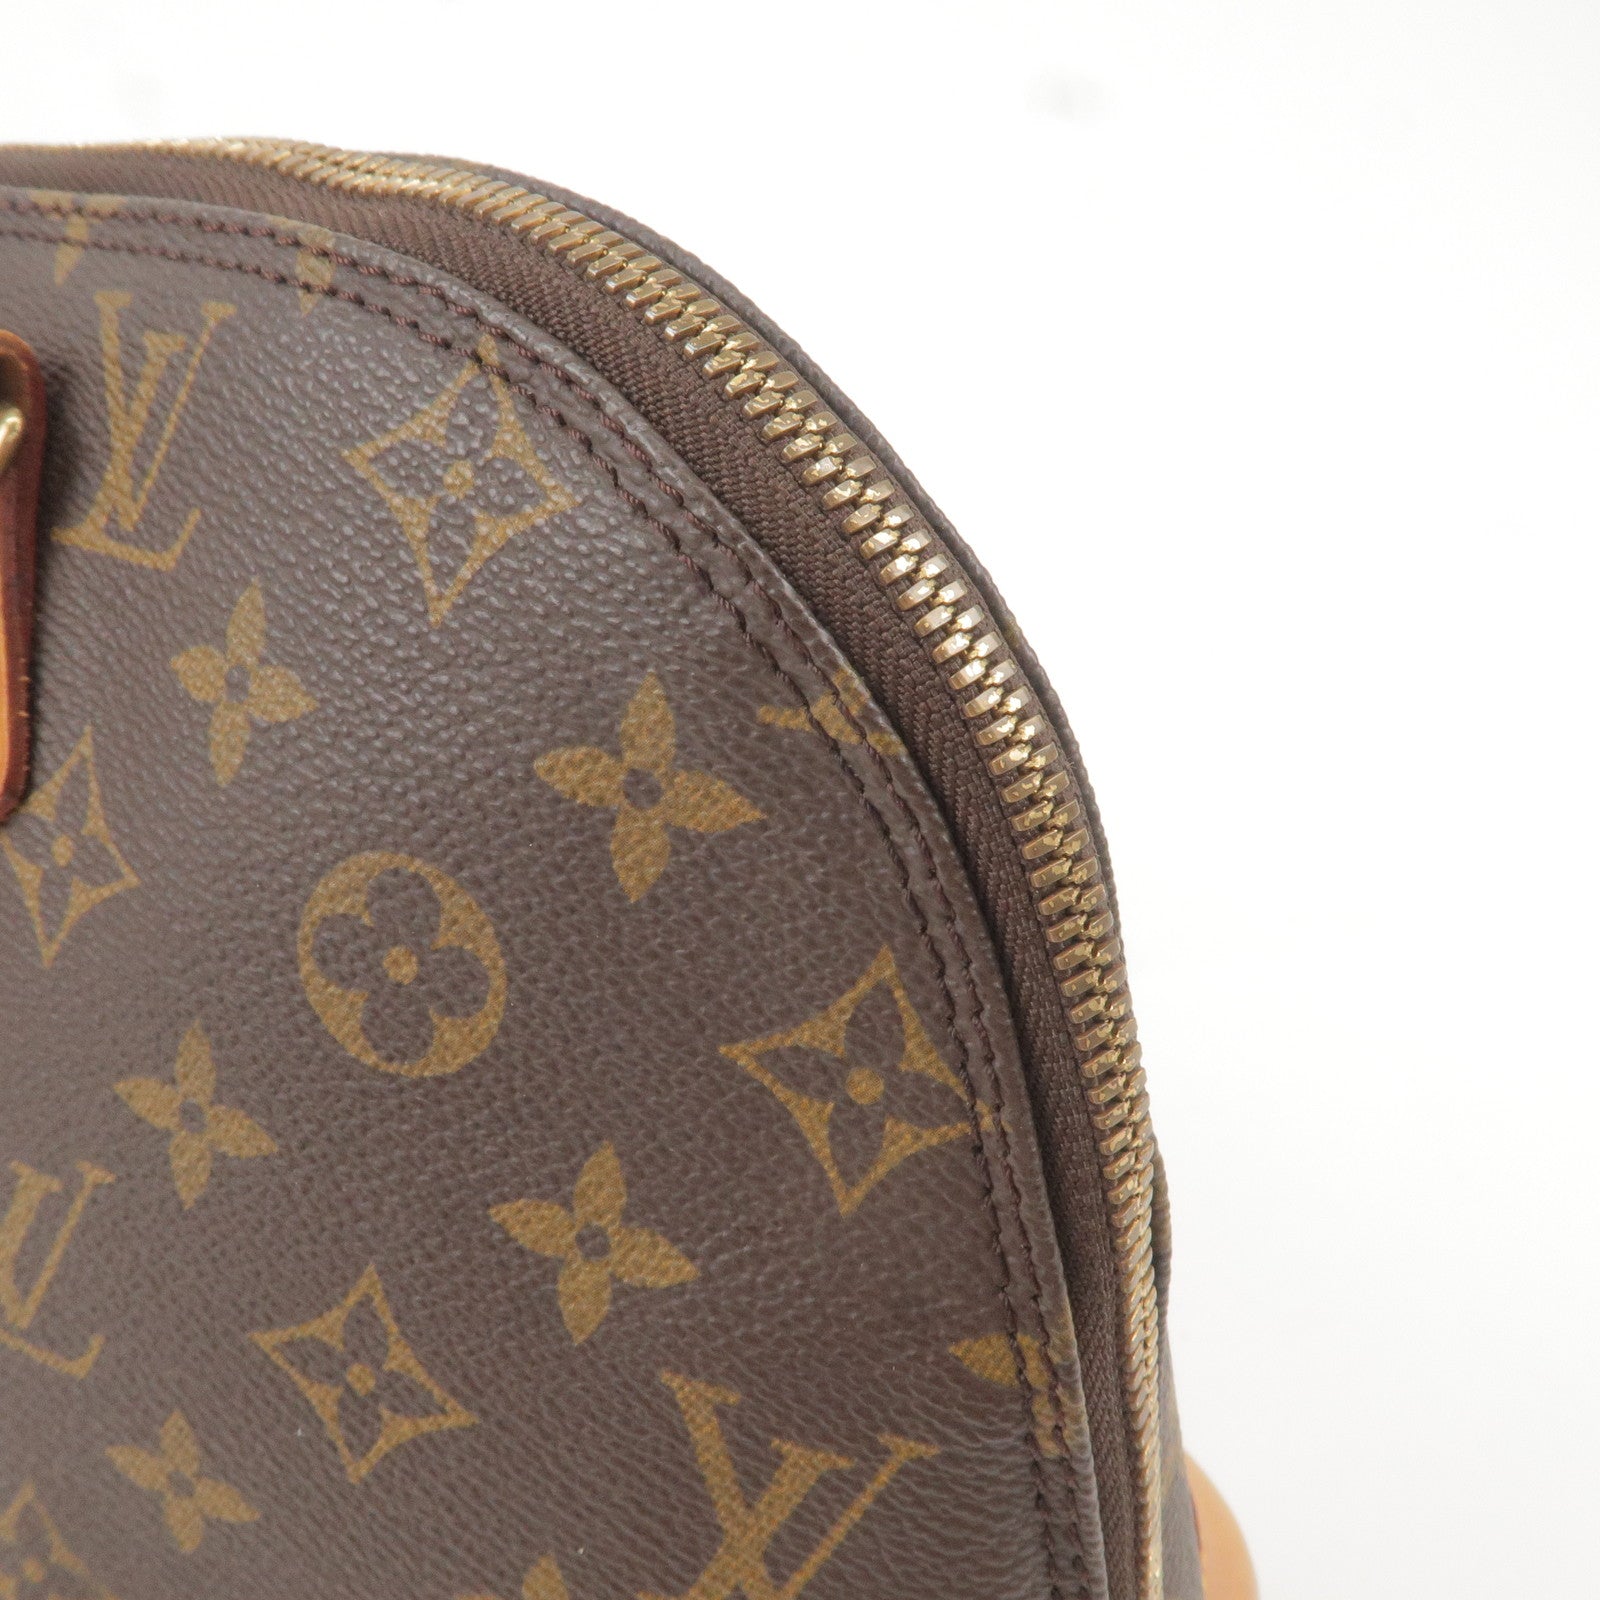 embroider bag - Louis Vuitton Epi Noe Shoulder Bag Borneo Green M44007 -  Hand - Vuitton - Monogram - M51130 – Louis Vuitton 2005 pre - owned  Popincourt top - Bag - Alma - Louis